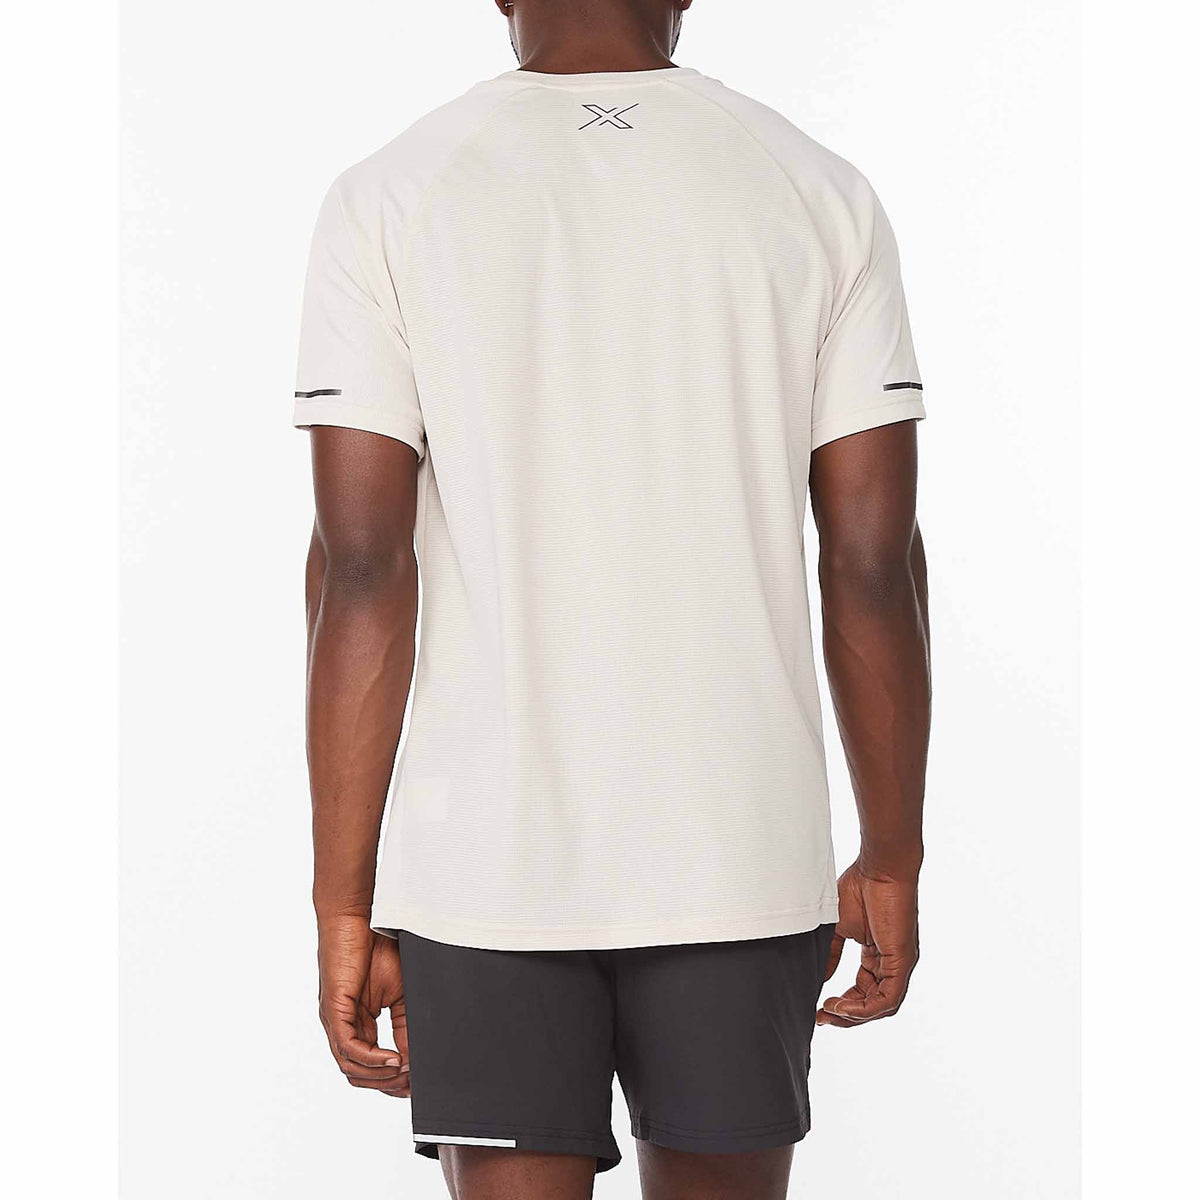 2XU Aero Tee t-shirt de course à pied pour homme oatmeal vue de dos